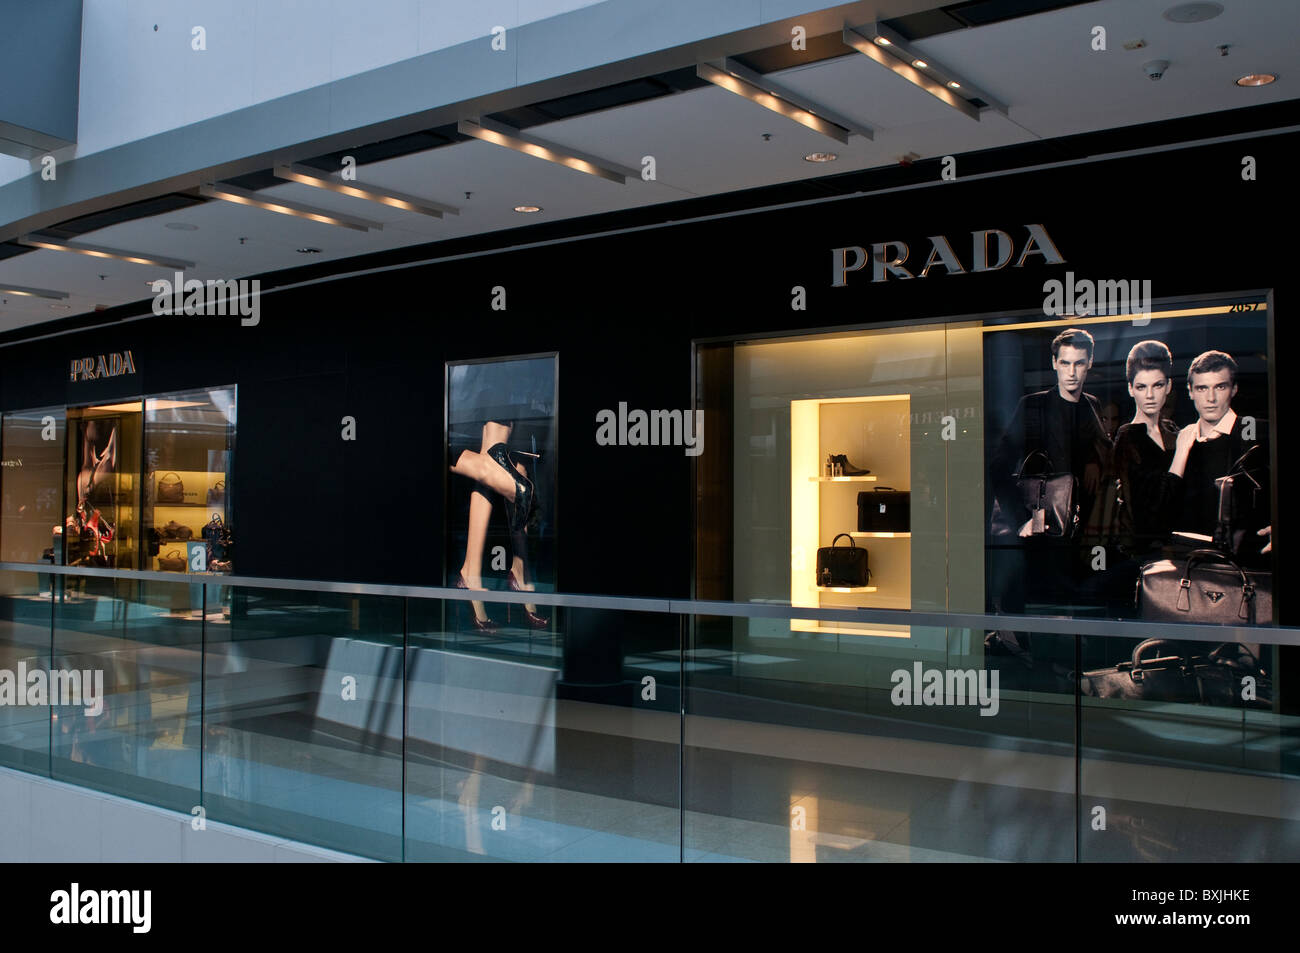 Prada shop ifc mall hi-res stock photography and images - Alamy